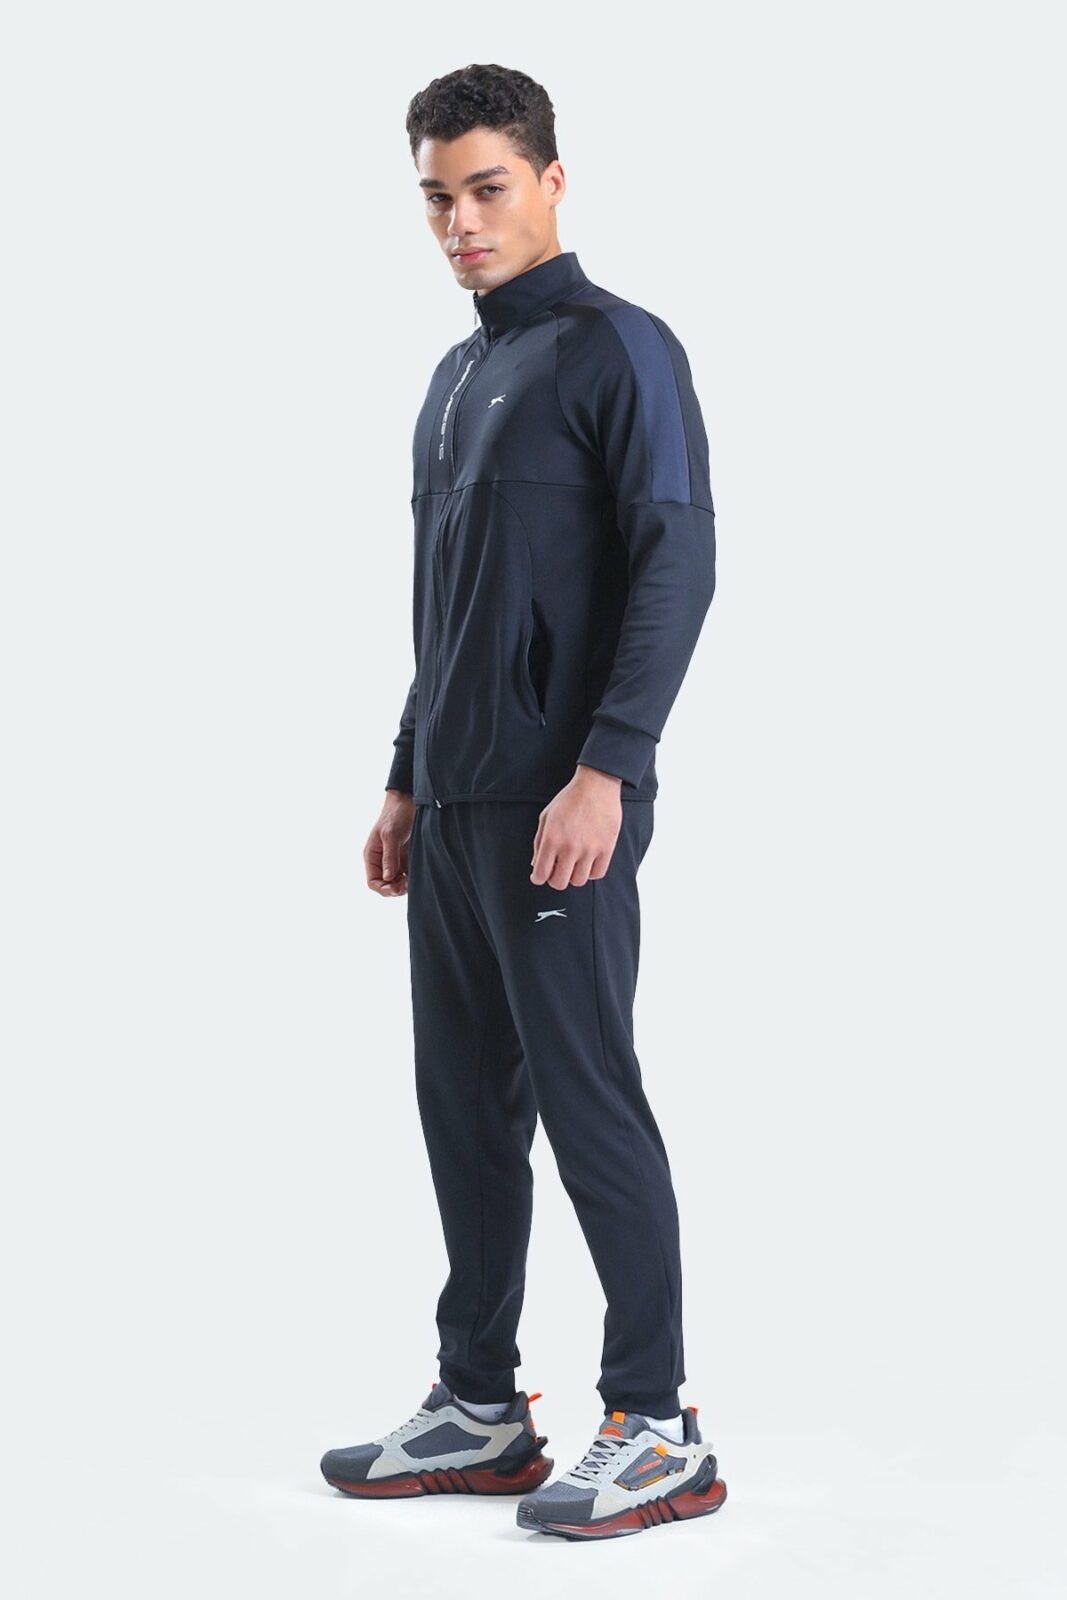 Slazenger Sweatsuit - Navy blue